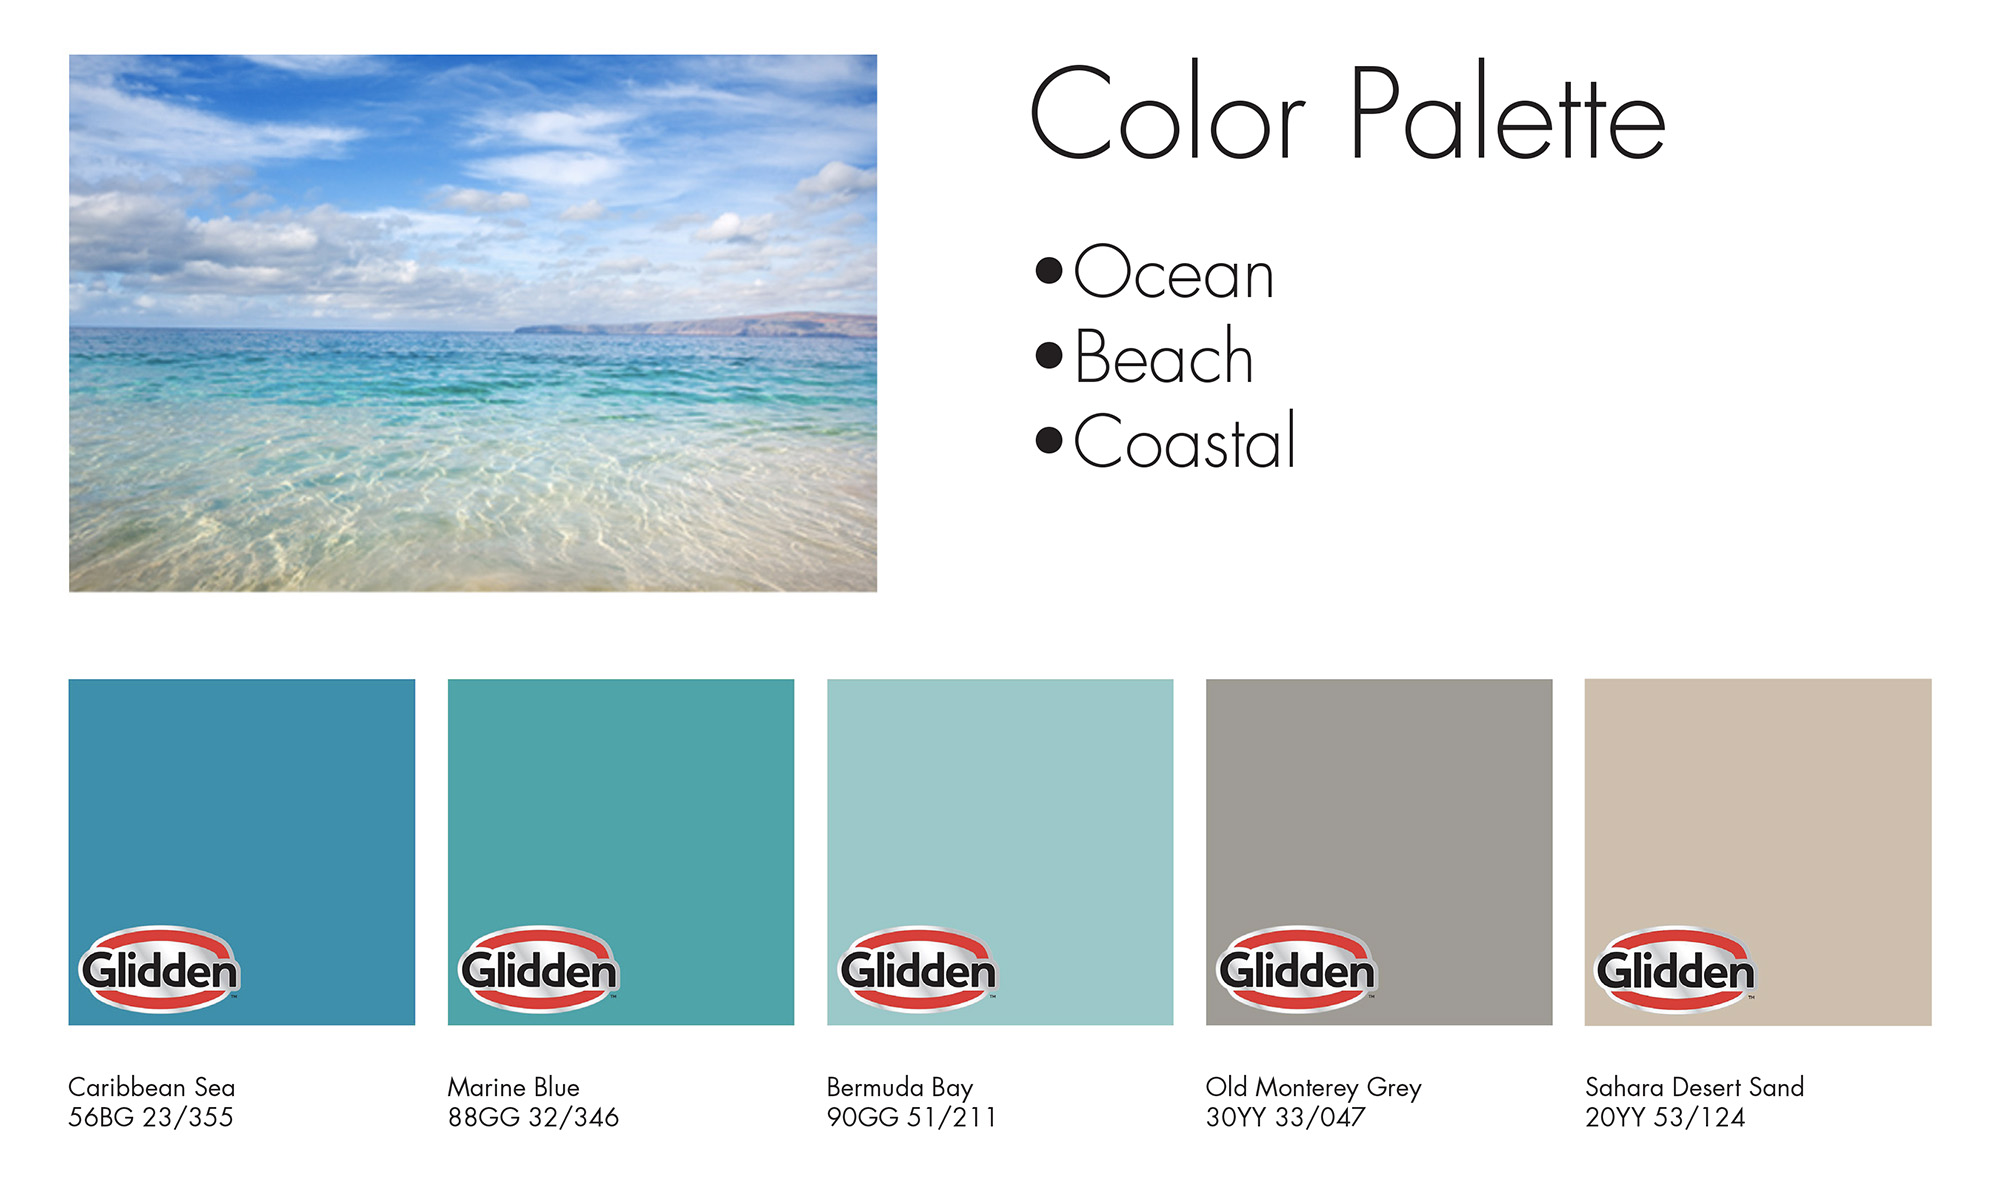 Coastal Beach Ocean Color Palette